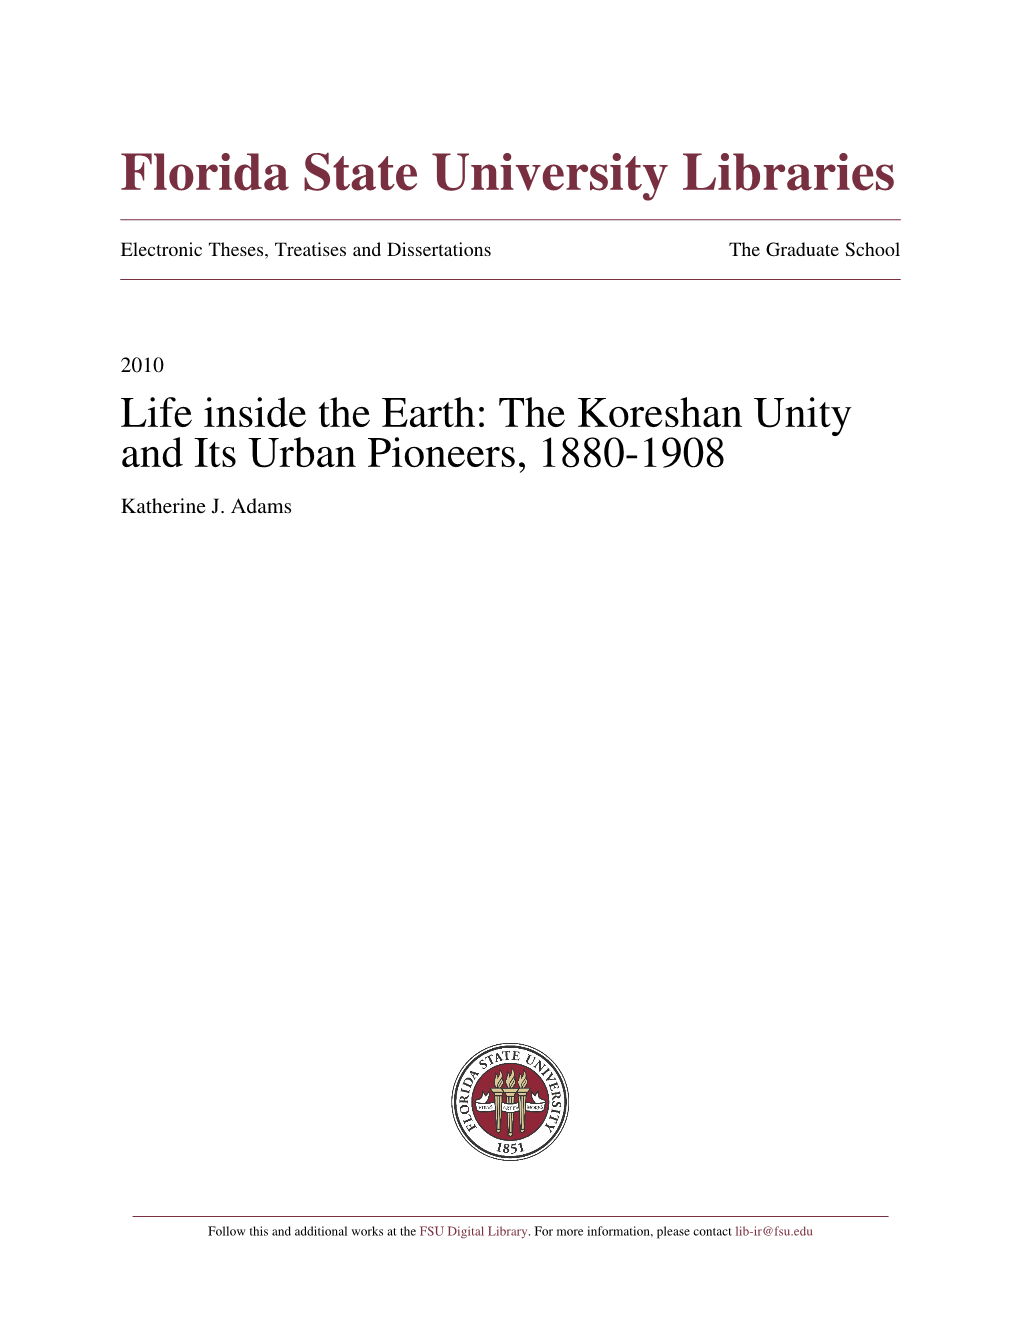 The Koreshan Unity and Its Urban Pioneers, 1880-1908 Katherine J